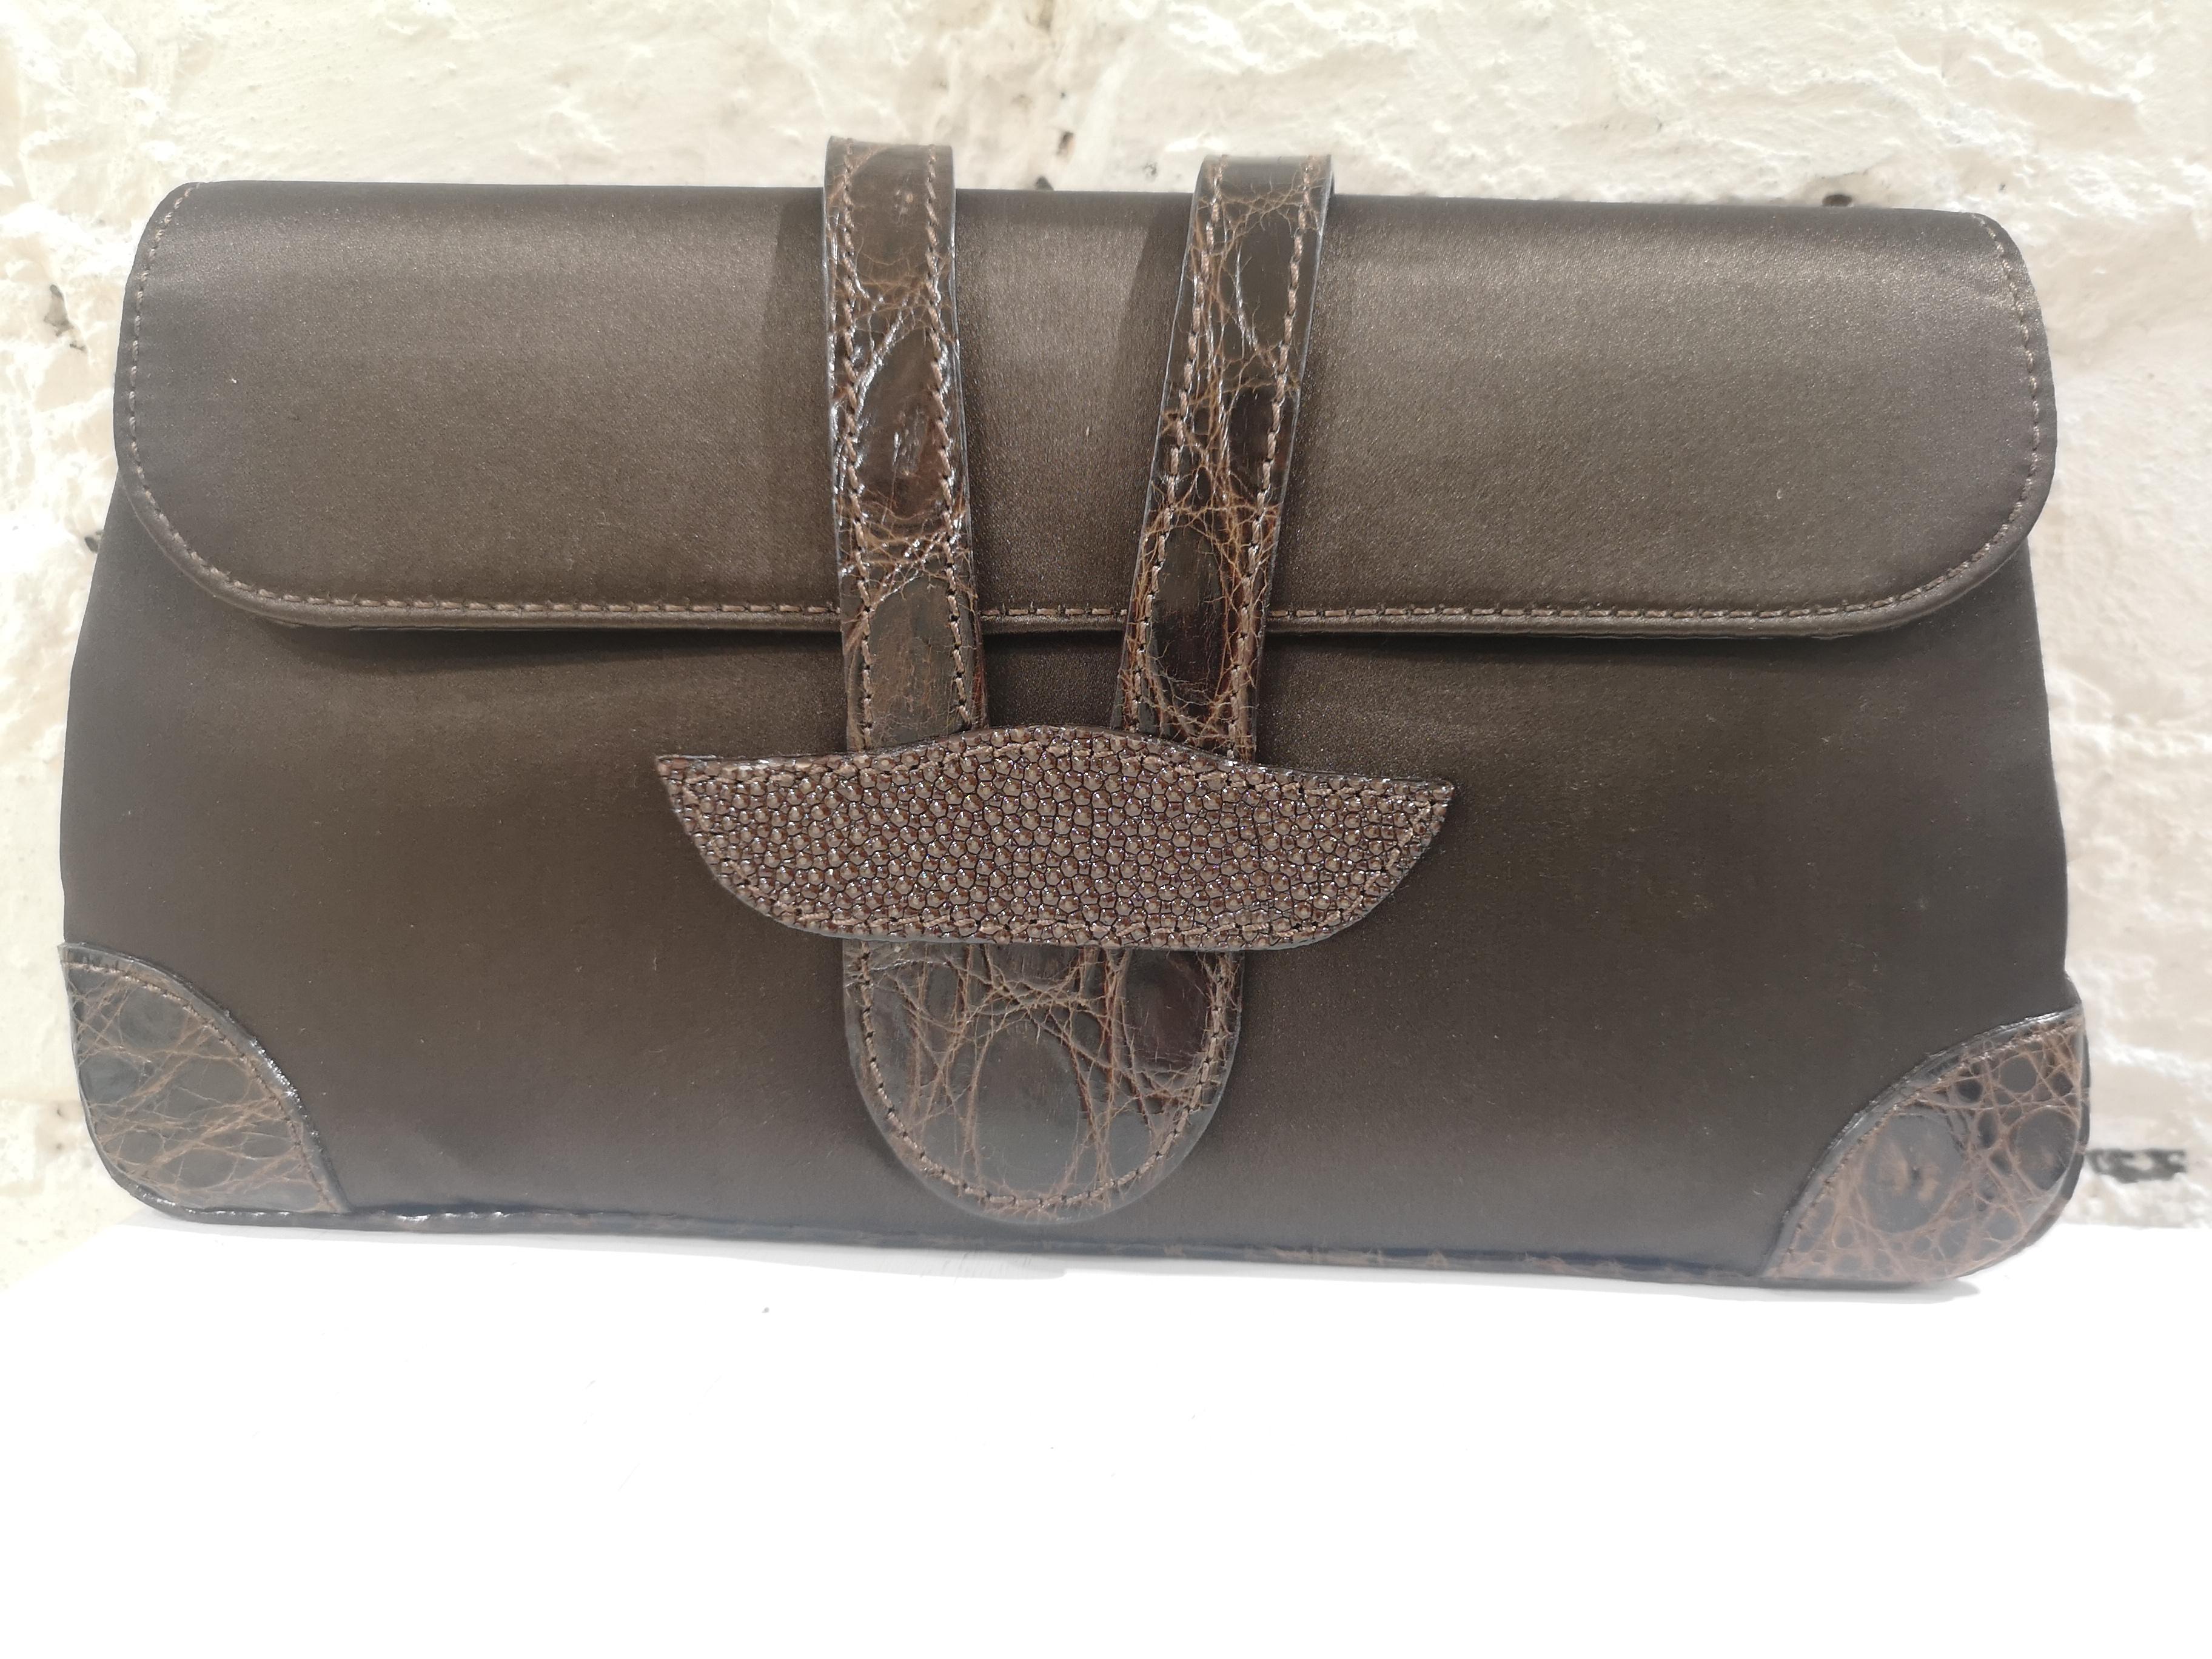 Dotti brown satin and croco print leather clutch 
measurements: 27 cm * 15 cm